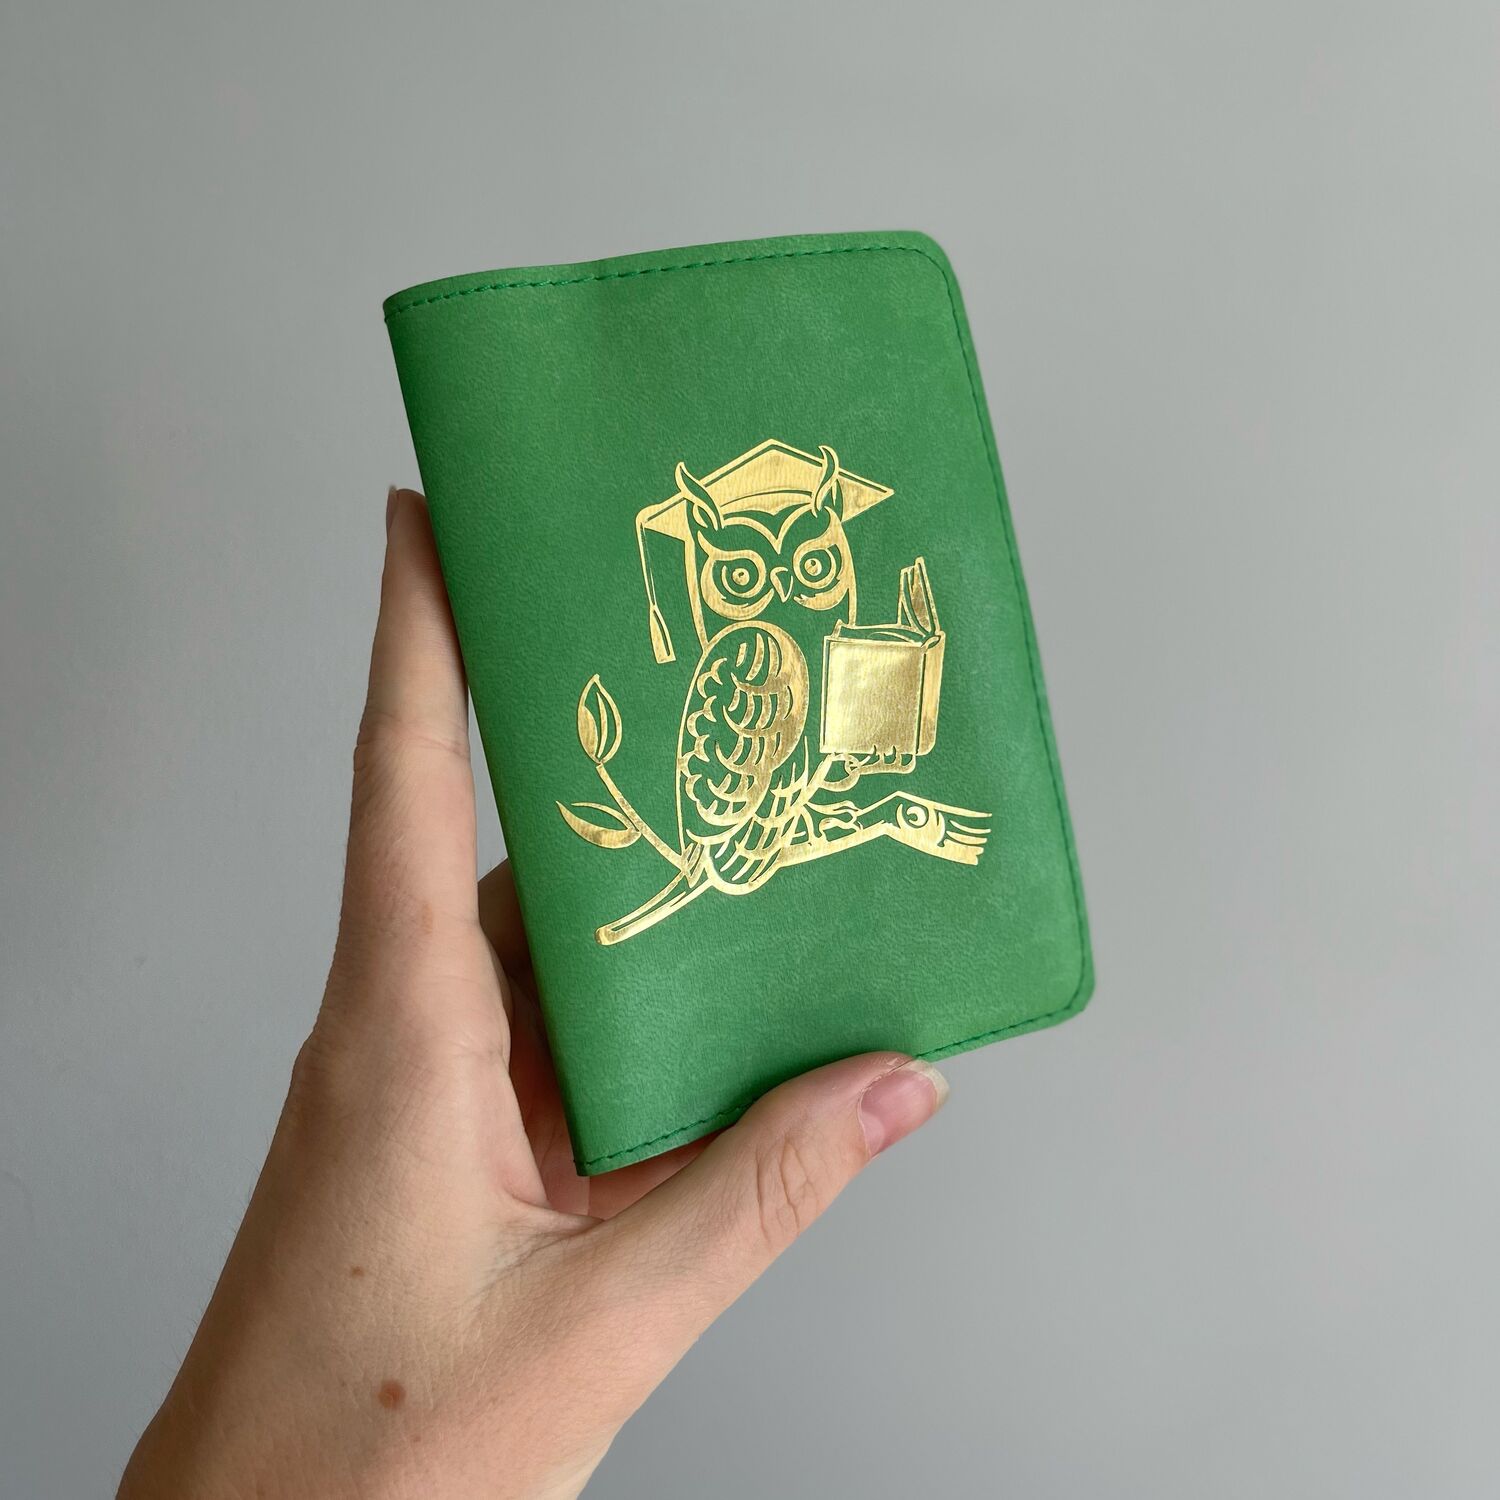 Обложка на паспорт для учителя, Обложка на паспорт, Санкт-Петербург,  Фото №1